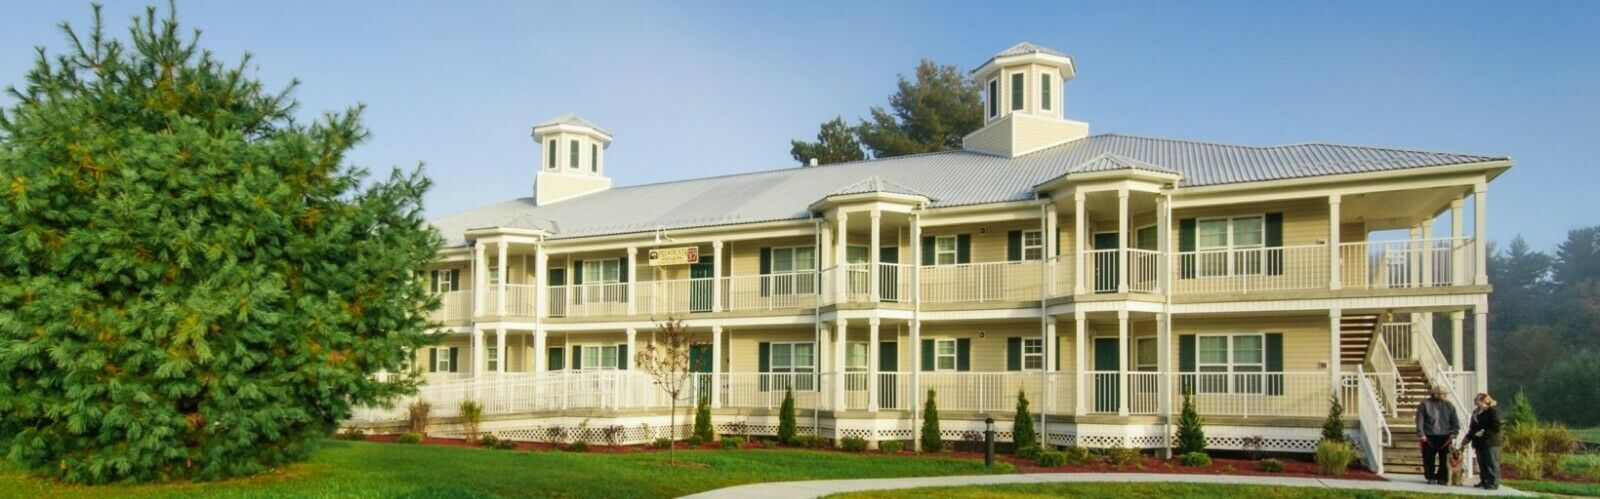 1 Week! Oak N' Spruce Resort! - Birkshires MA! 2 BEDROOM! APRIL - JUNE!